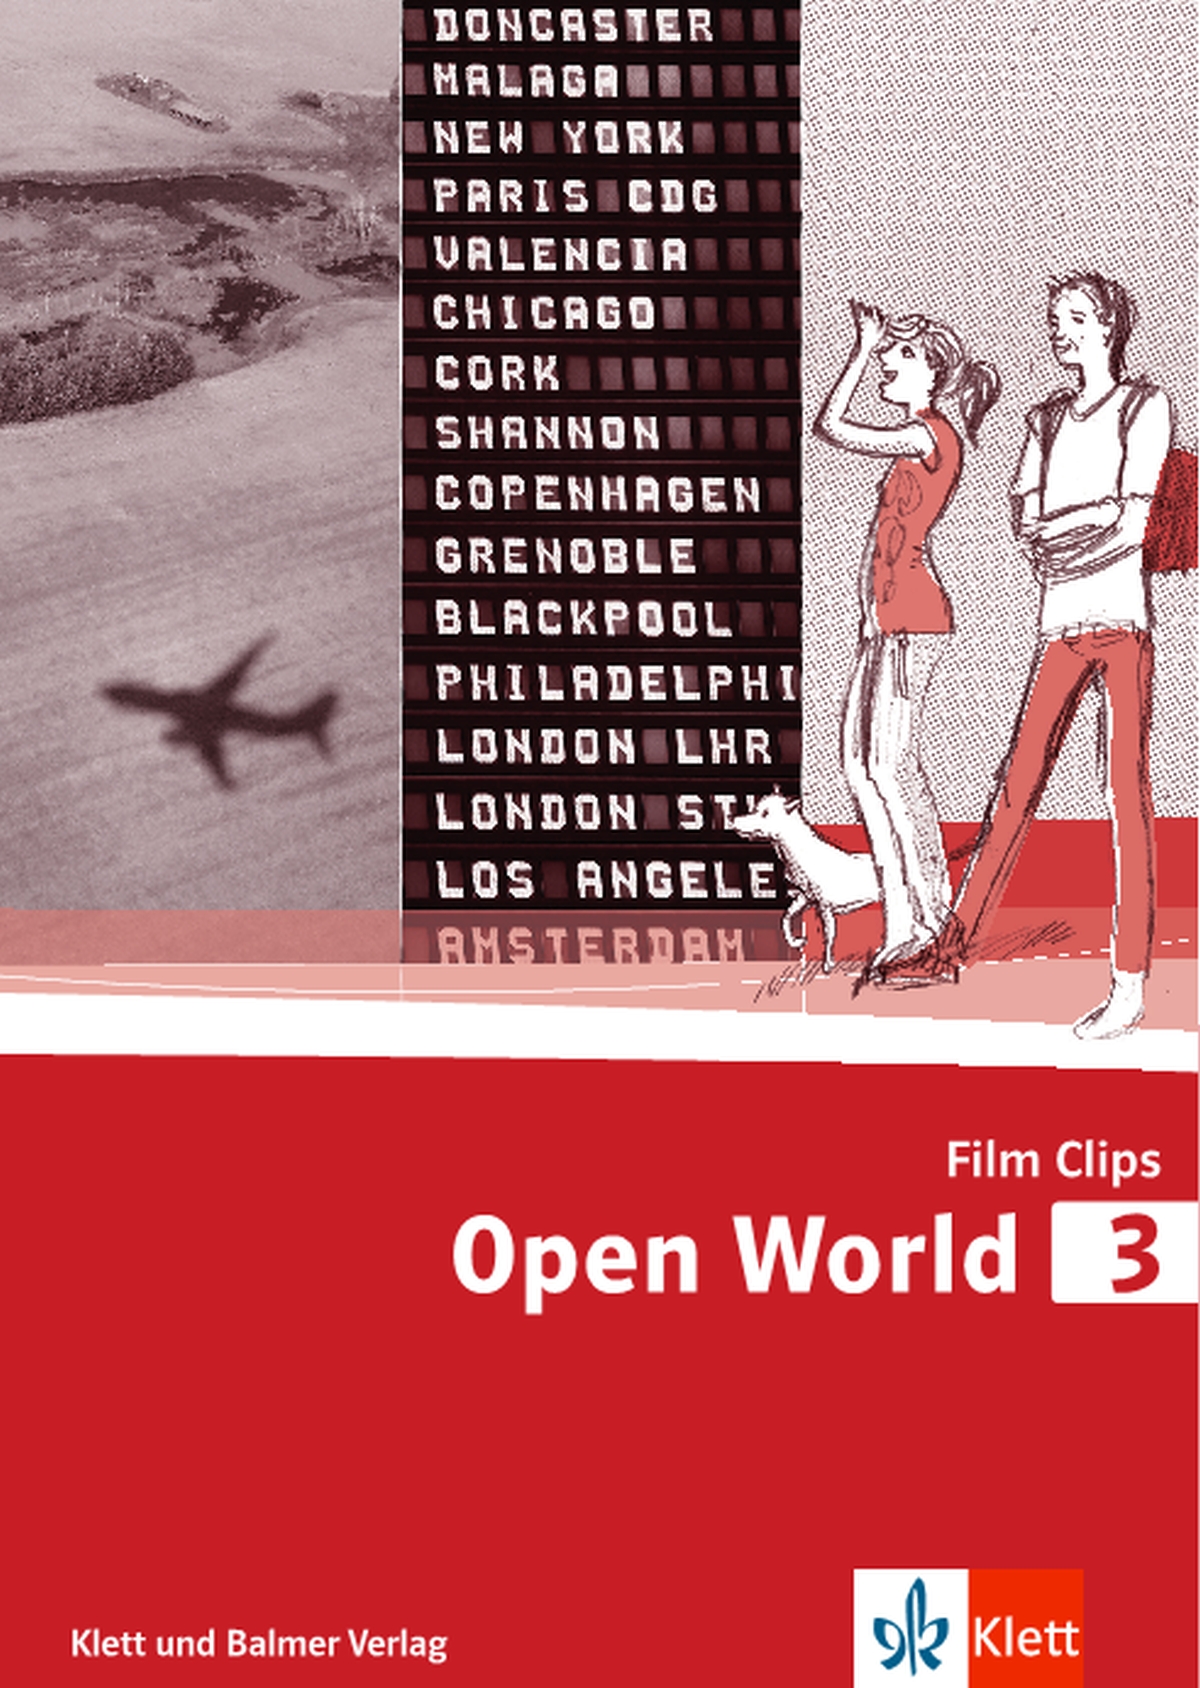 Open World 3 Film Clips